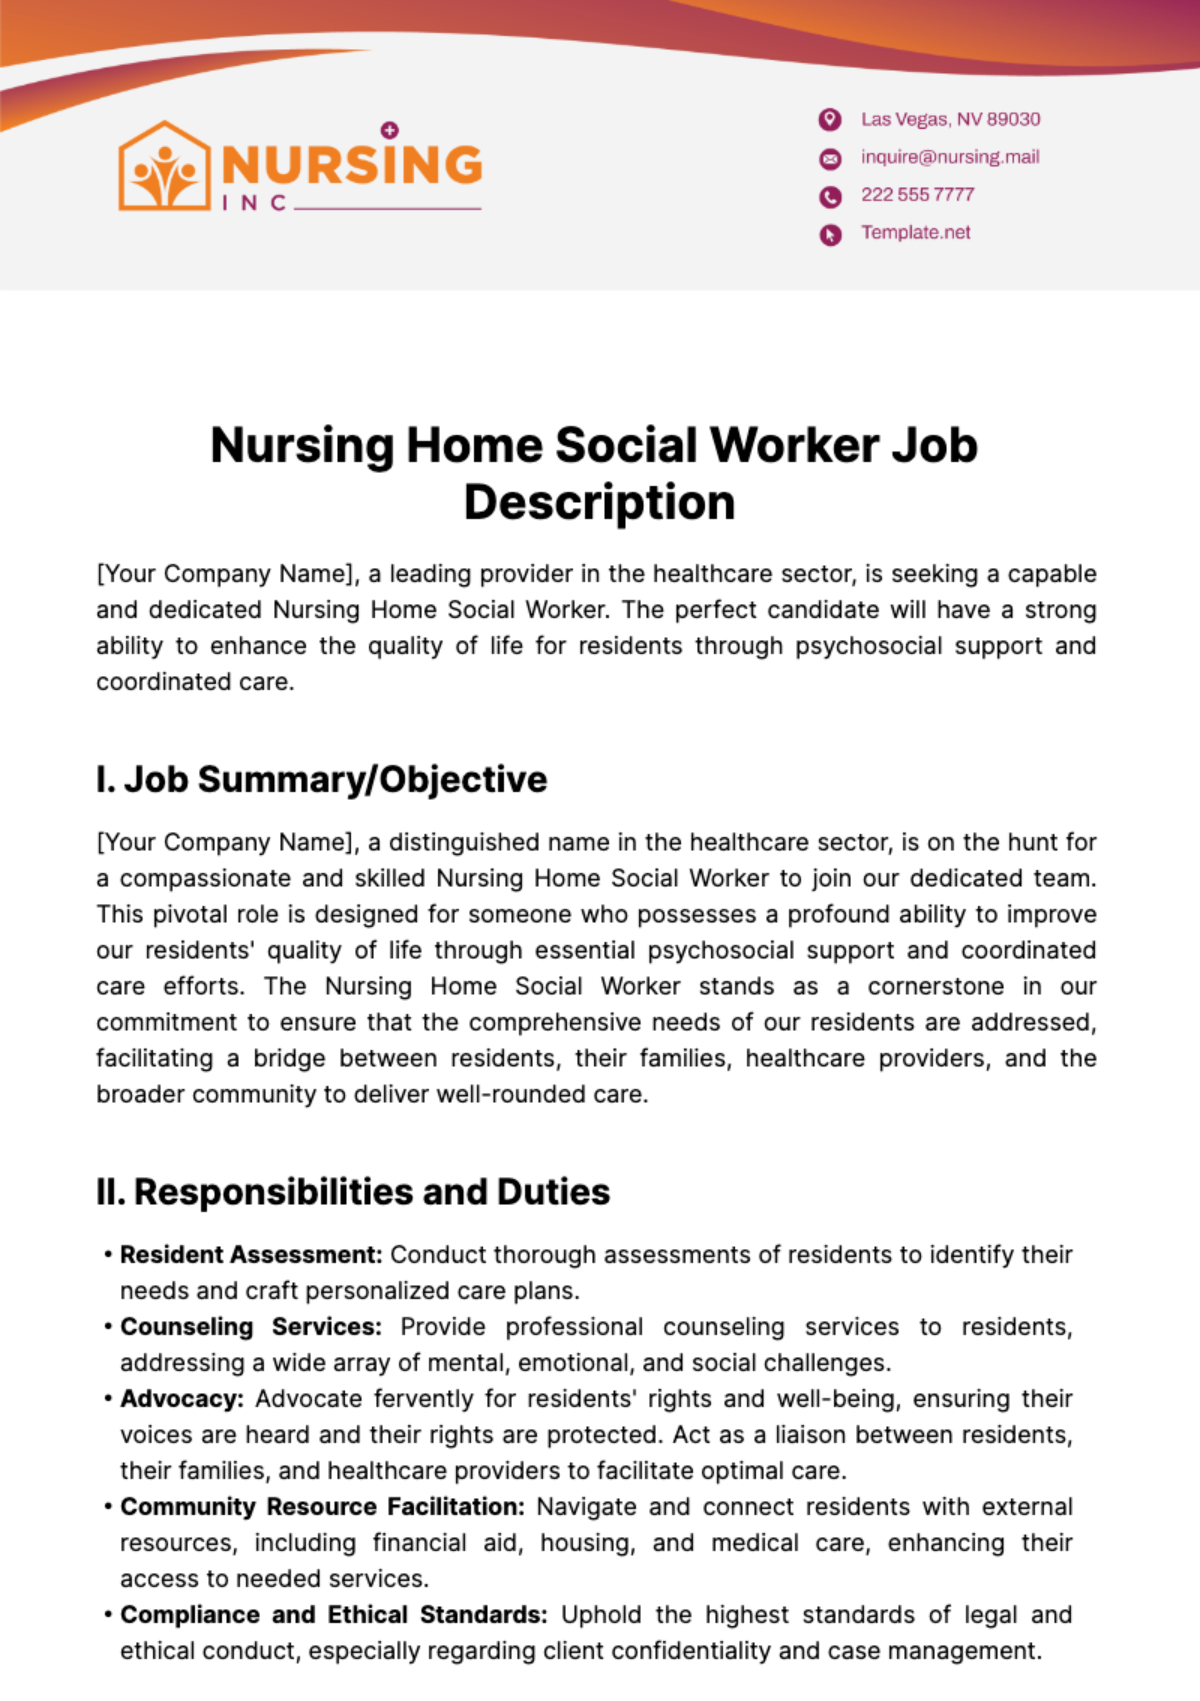 Nursing Home Social Worker Job Description Template